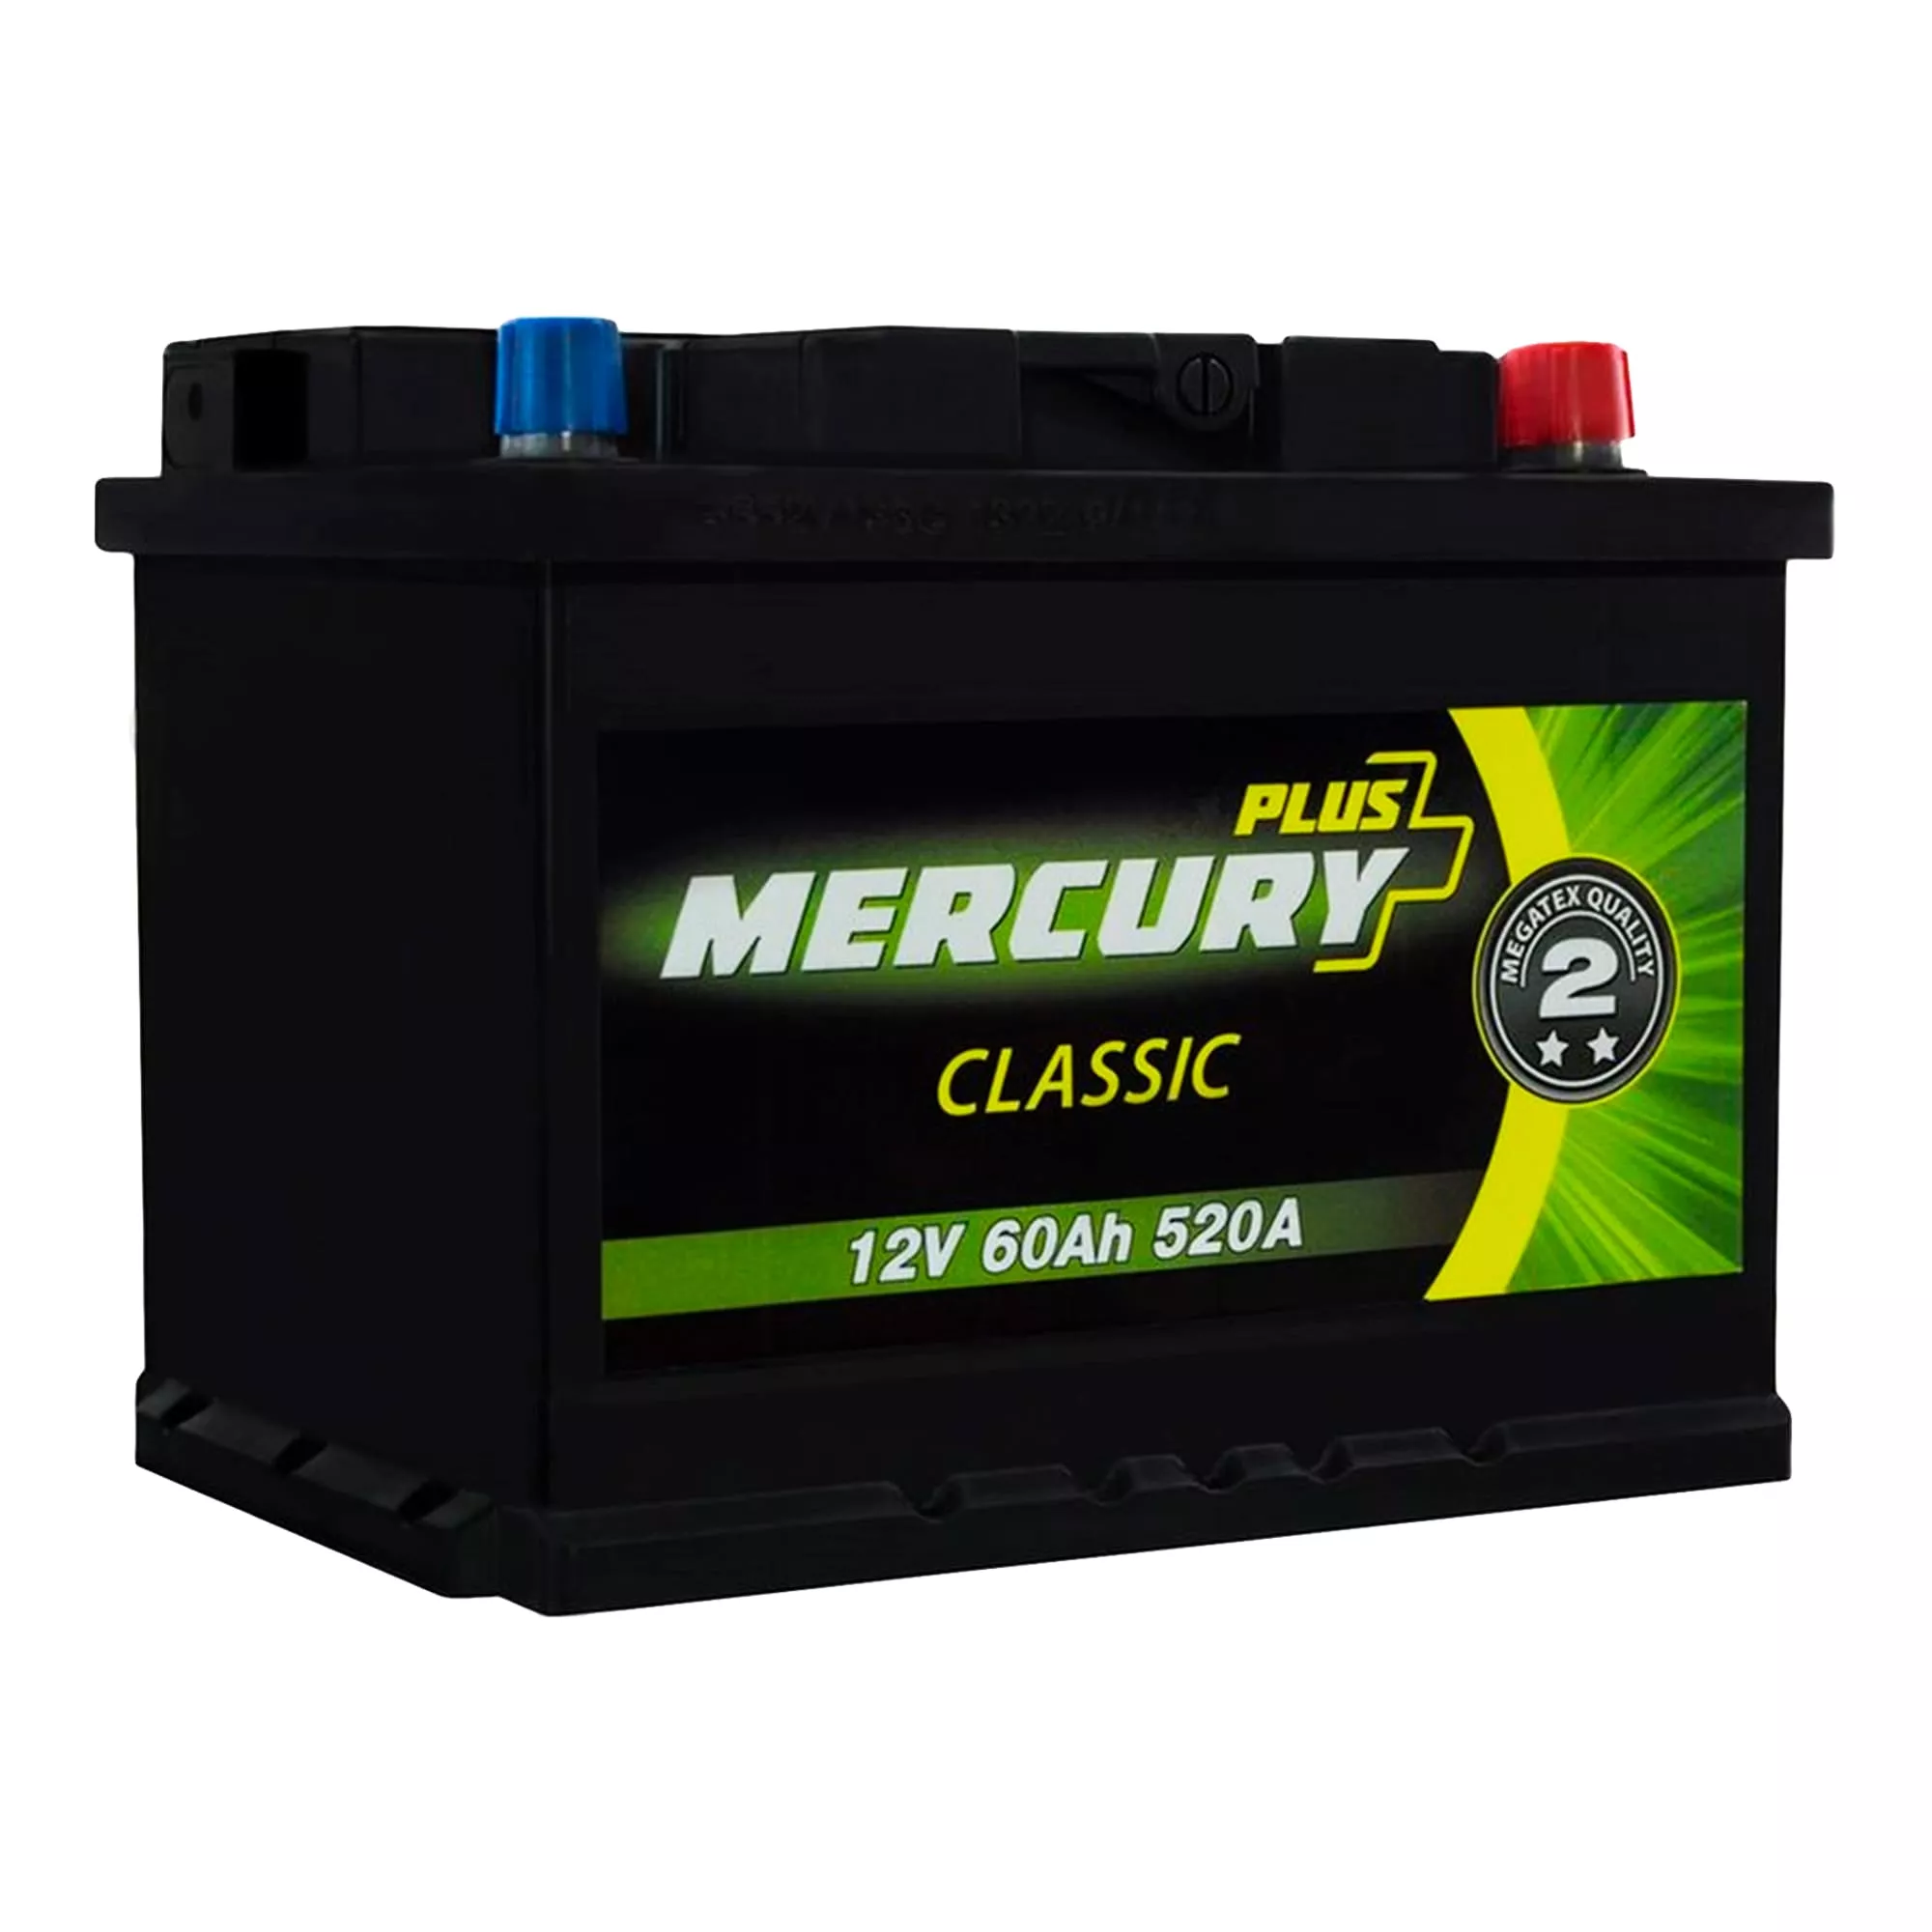 Автомобильный аккумулятор MERCURY CLASSIC PLUS 6СТ-60Ah 520A АзЕ (47295)